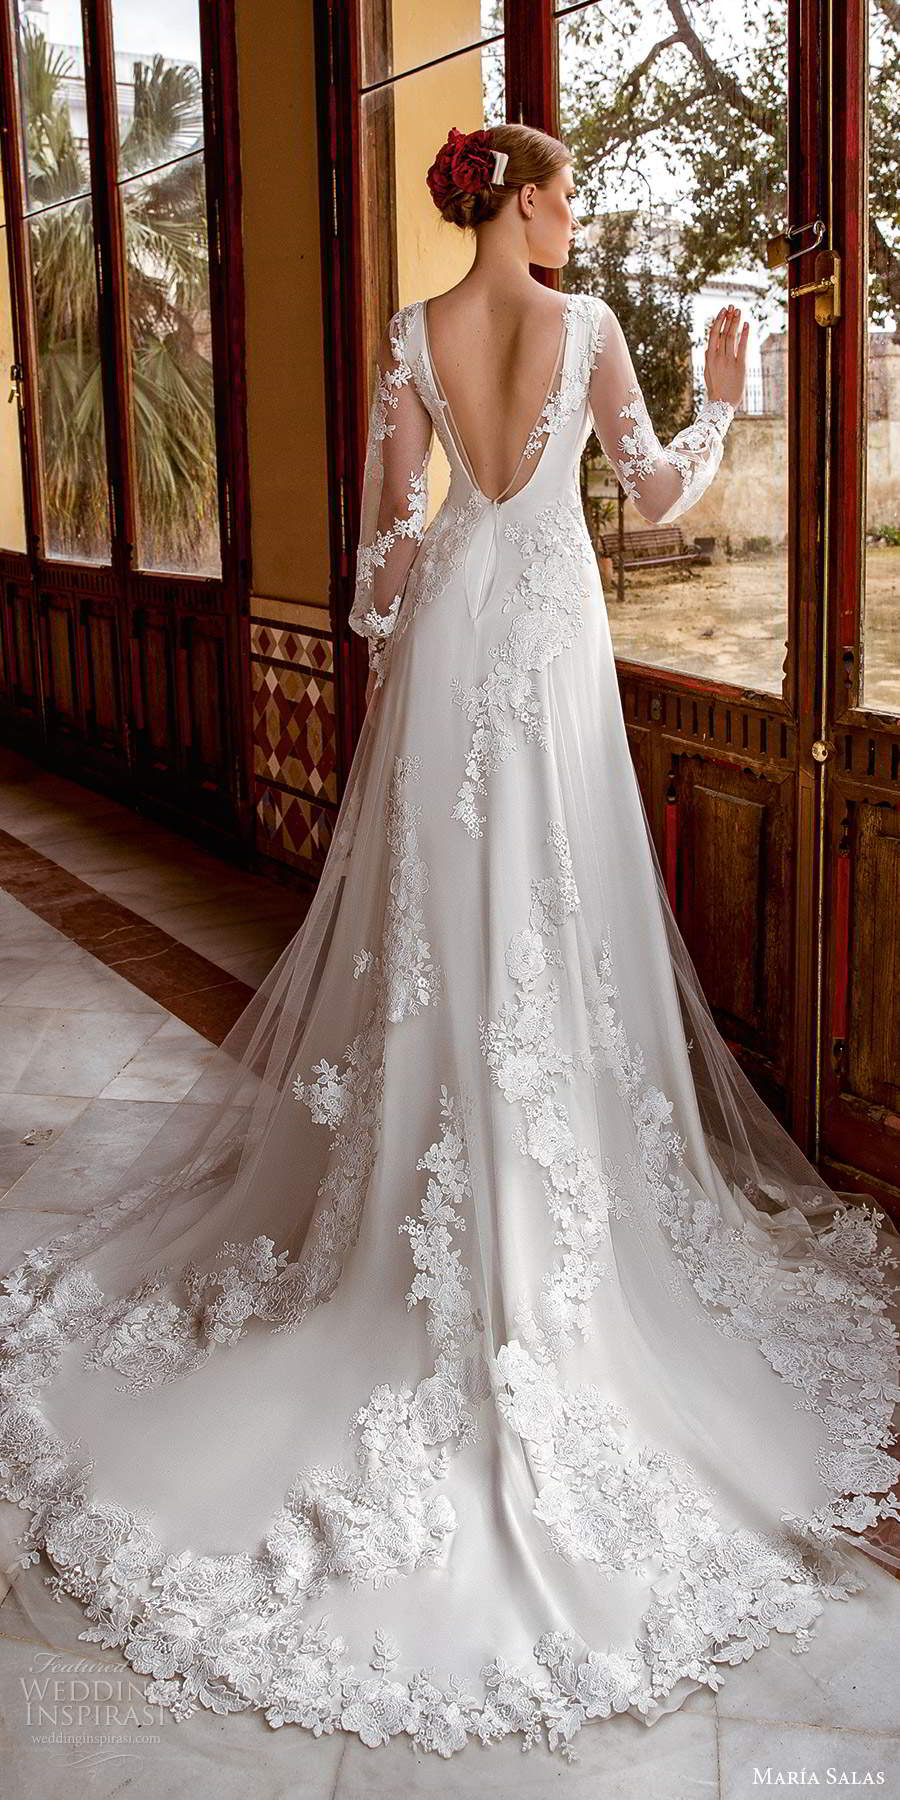 maria salas 2019 bridal sheer long bishop sleeves bateau neckline embellished a line ball gown wedding dress chapel train (3) bv